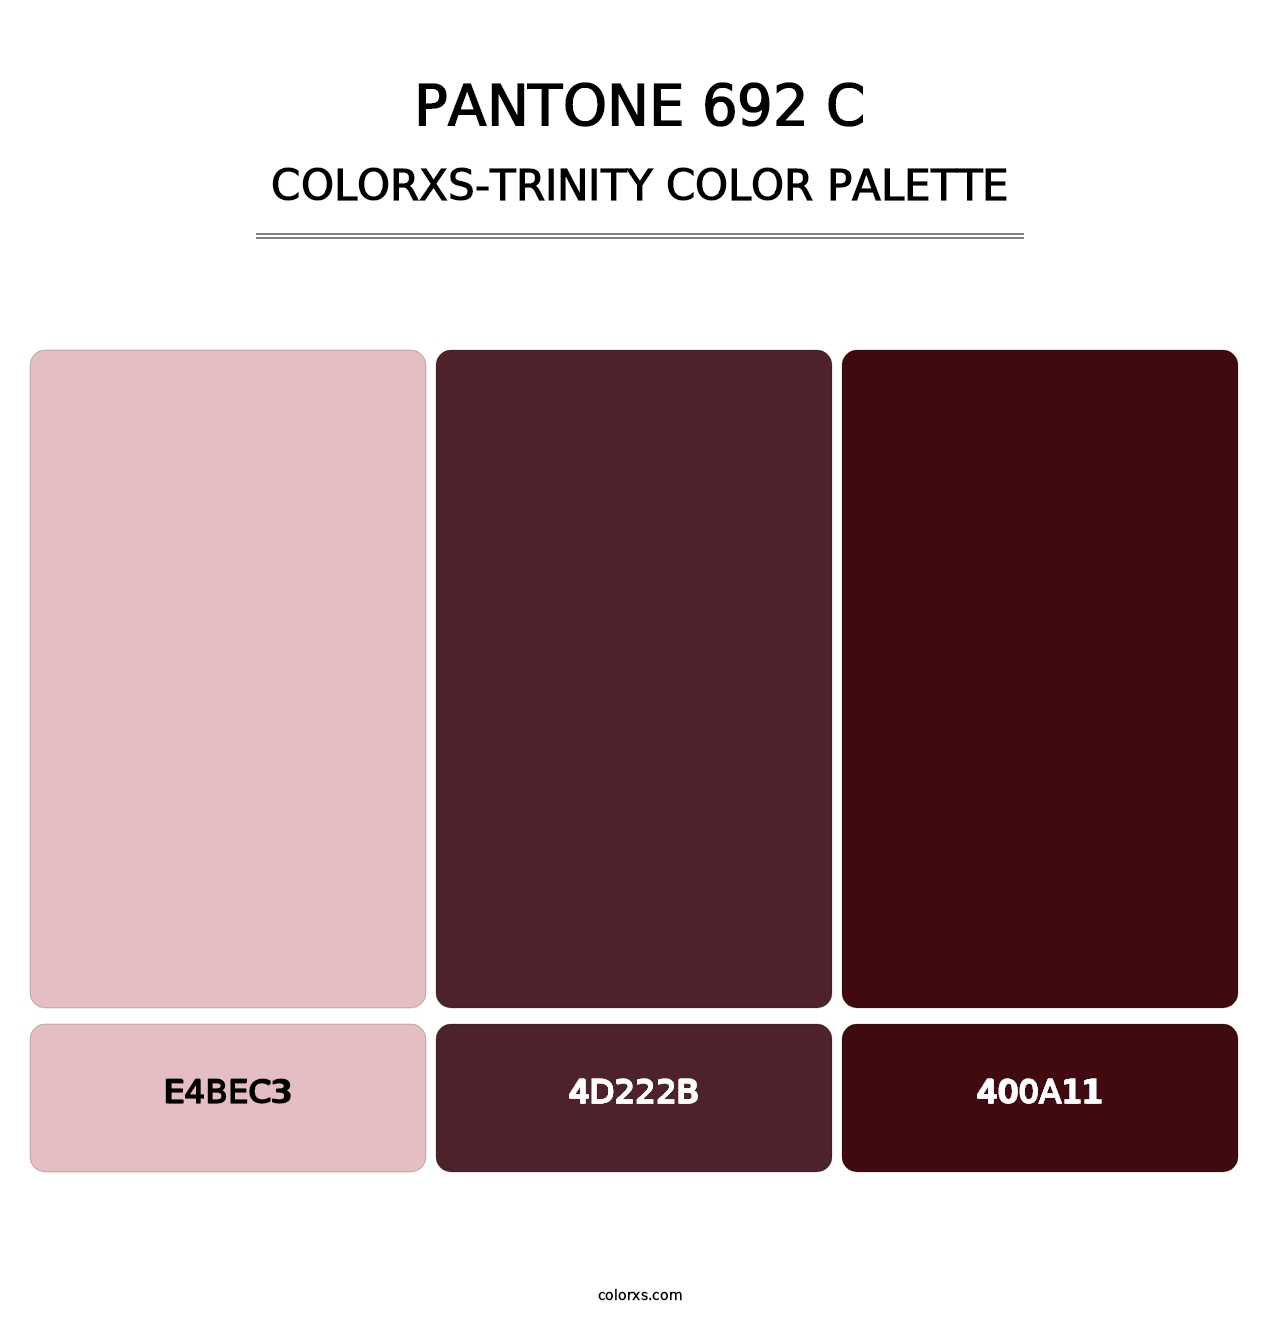 PANTONE 692 C - Colorxs Trinity Palette